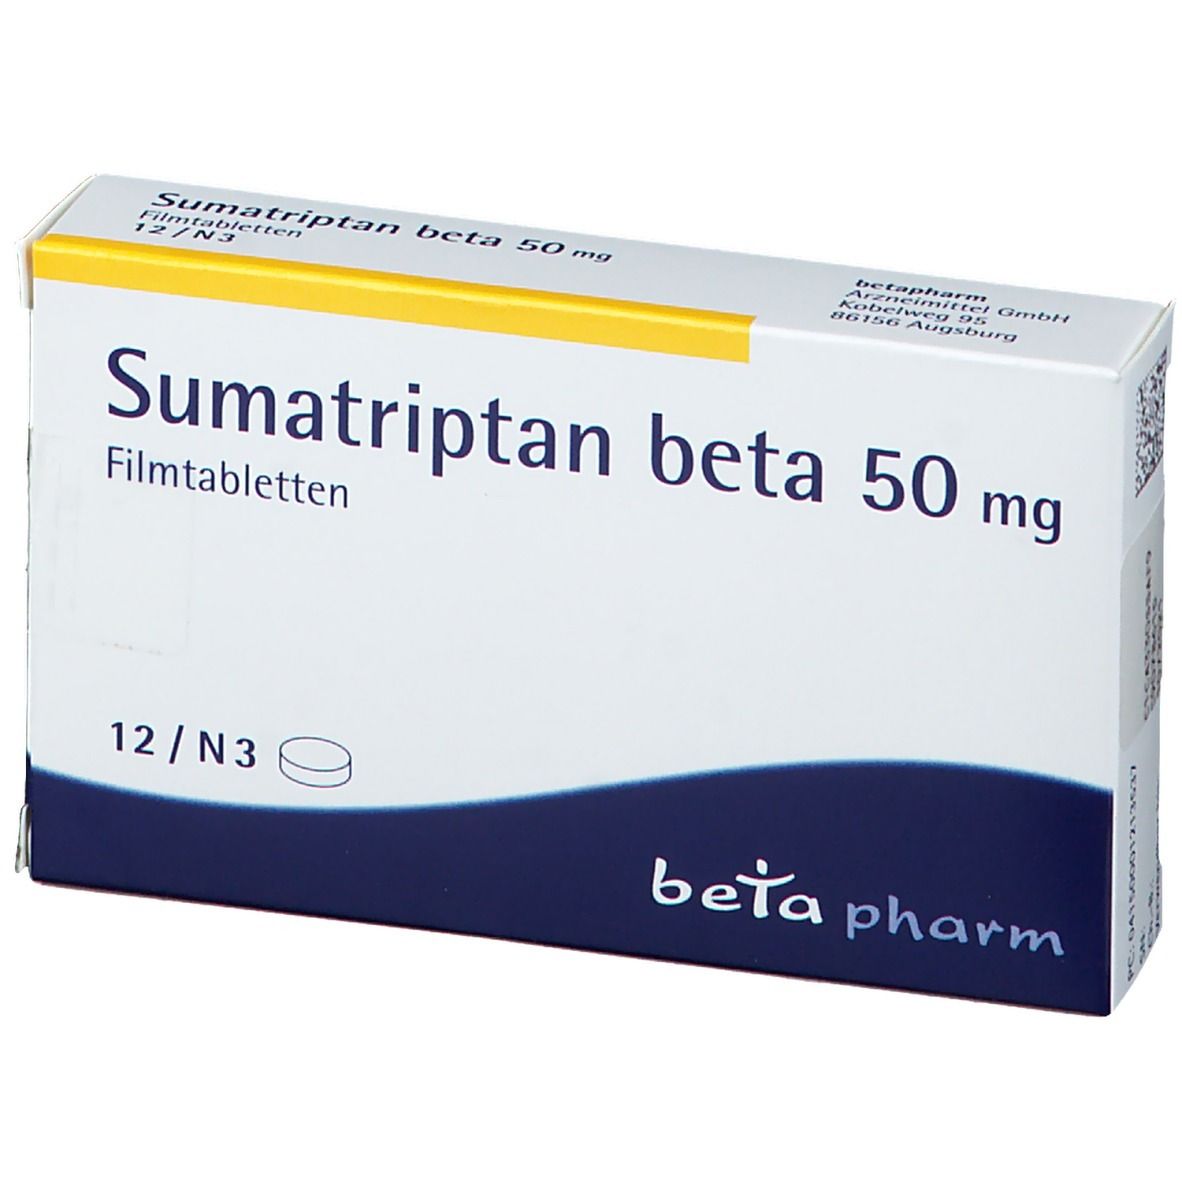 Sumatriptan beta 50 mg